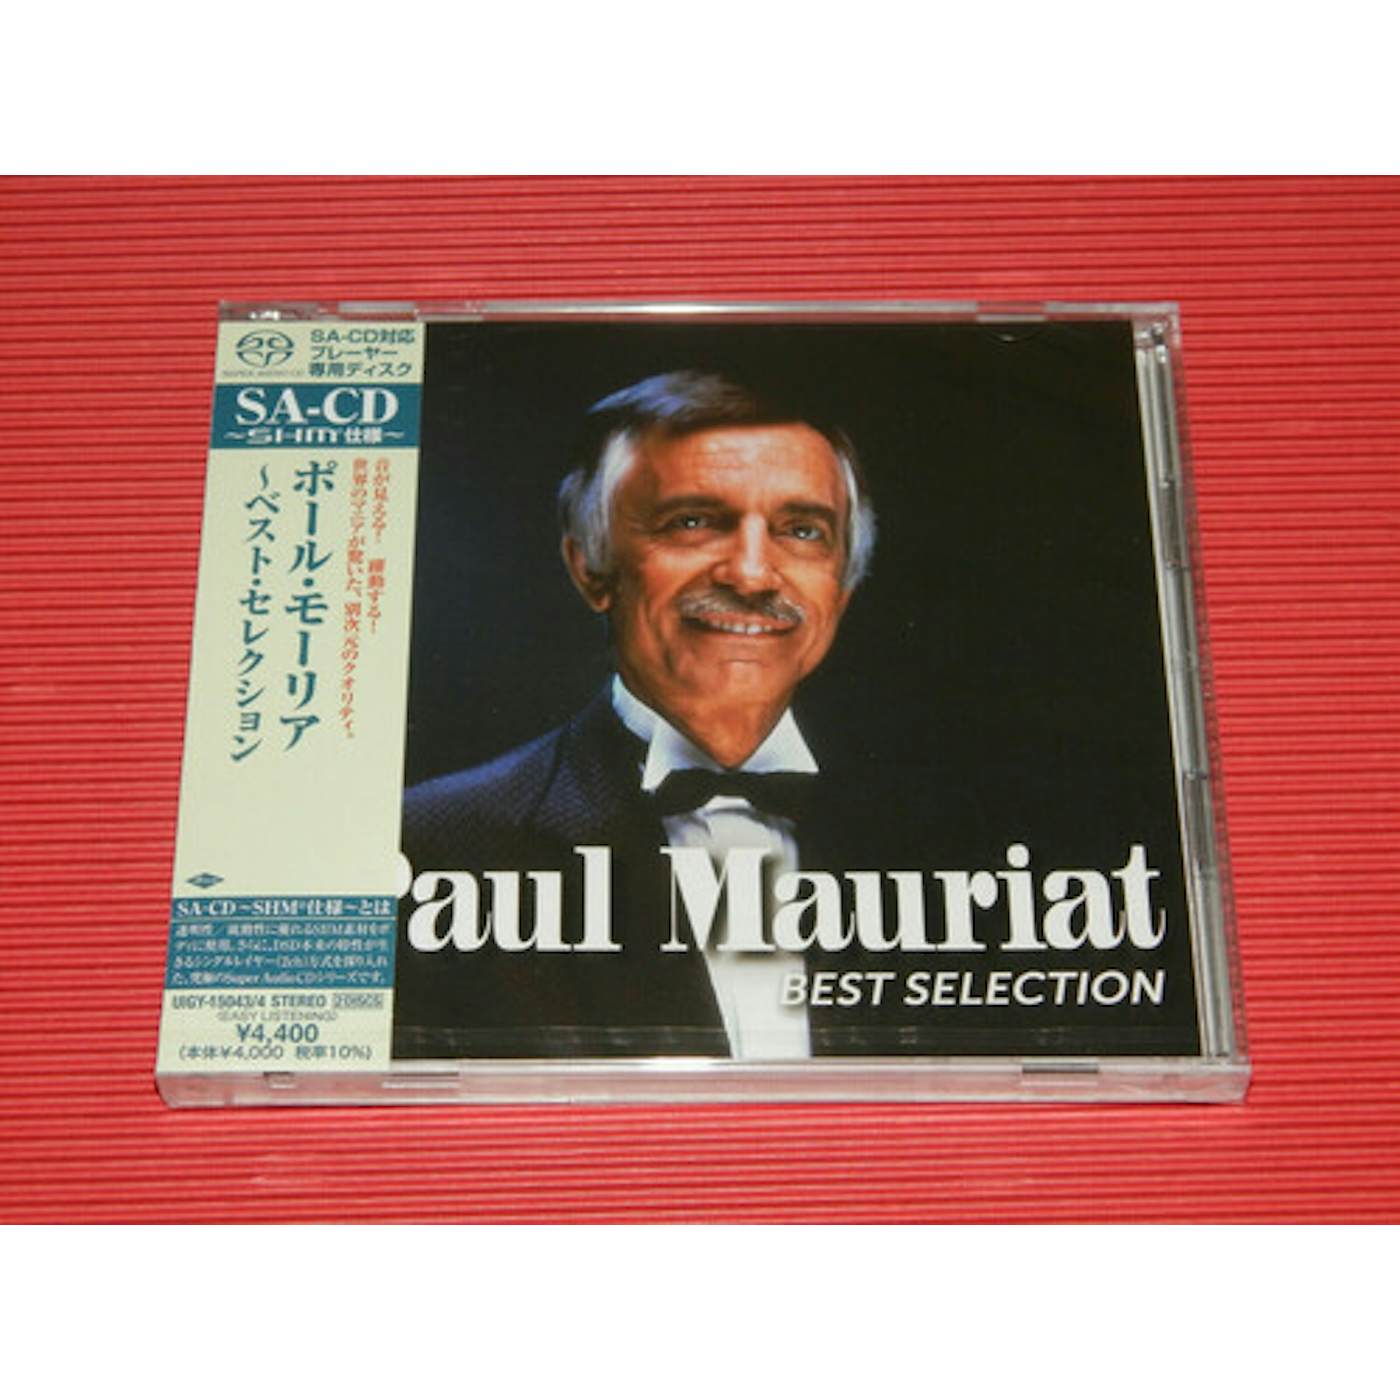 PAUL MAURIAT BEST SELECTION Super Audio CD